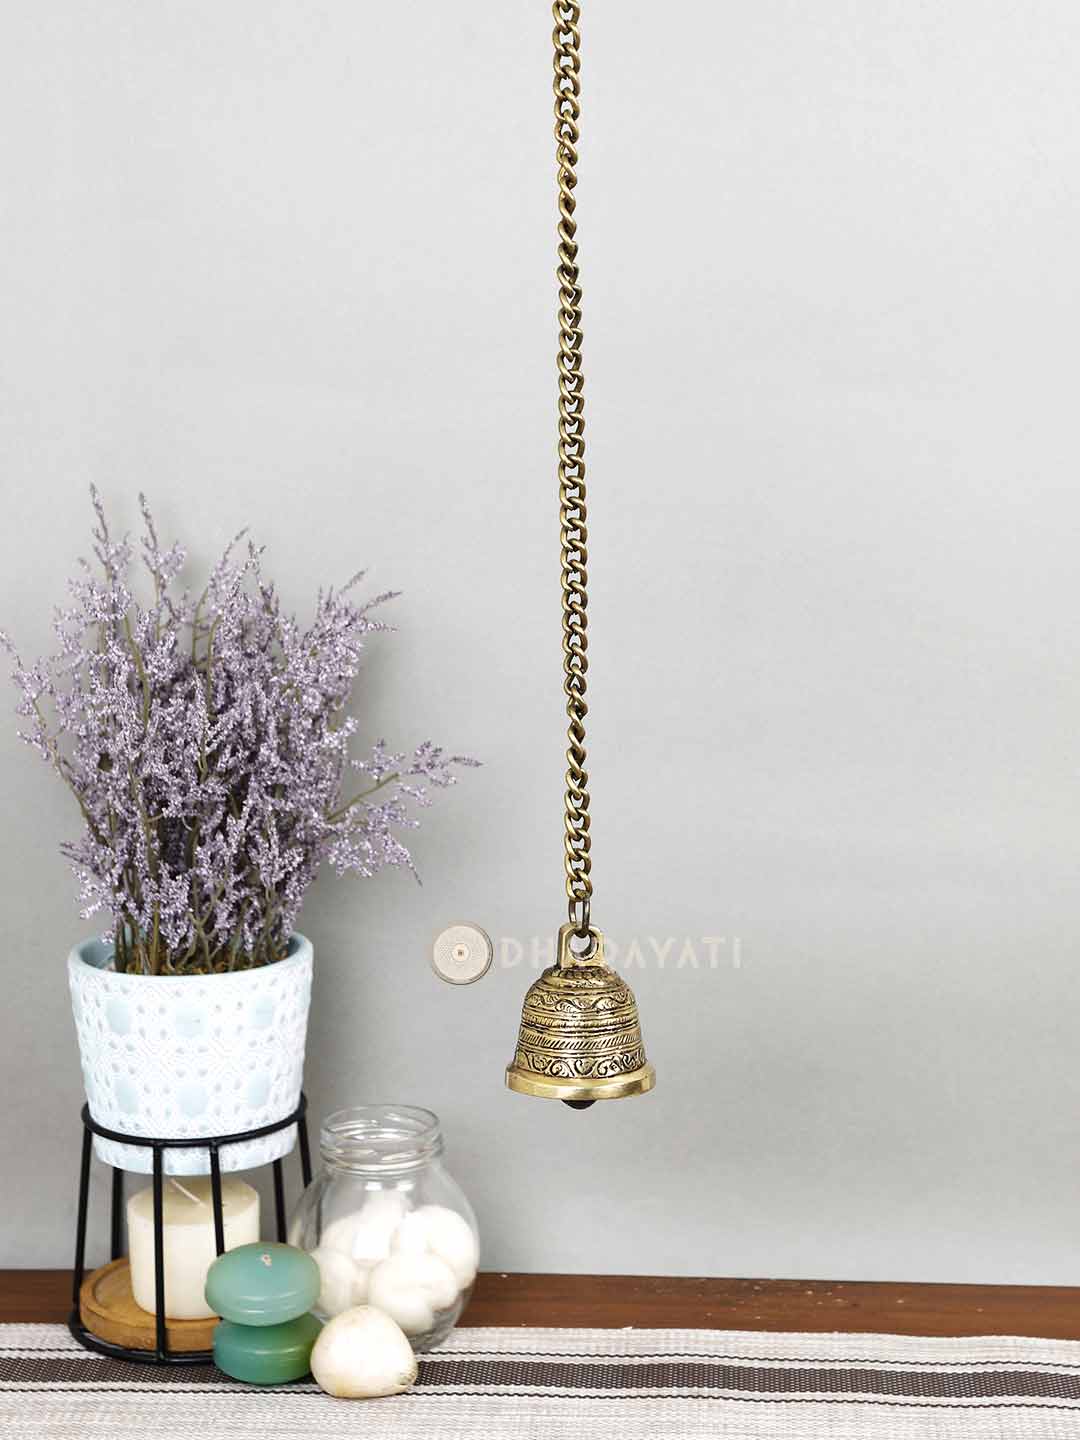 Mandir Hanging Bell Small Decorative Brass – Dharayati